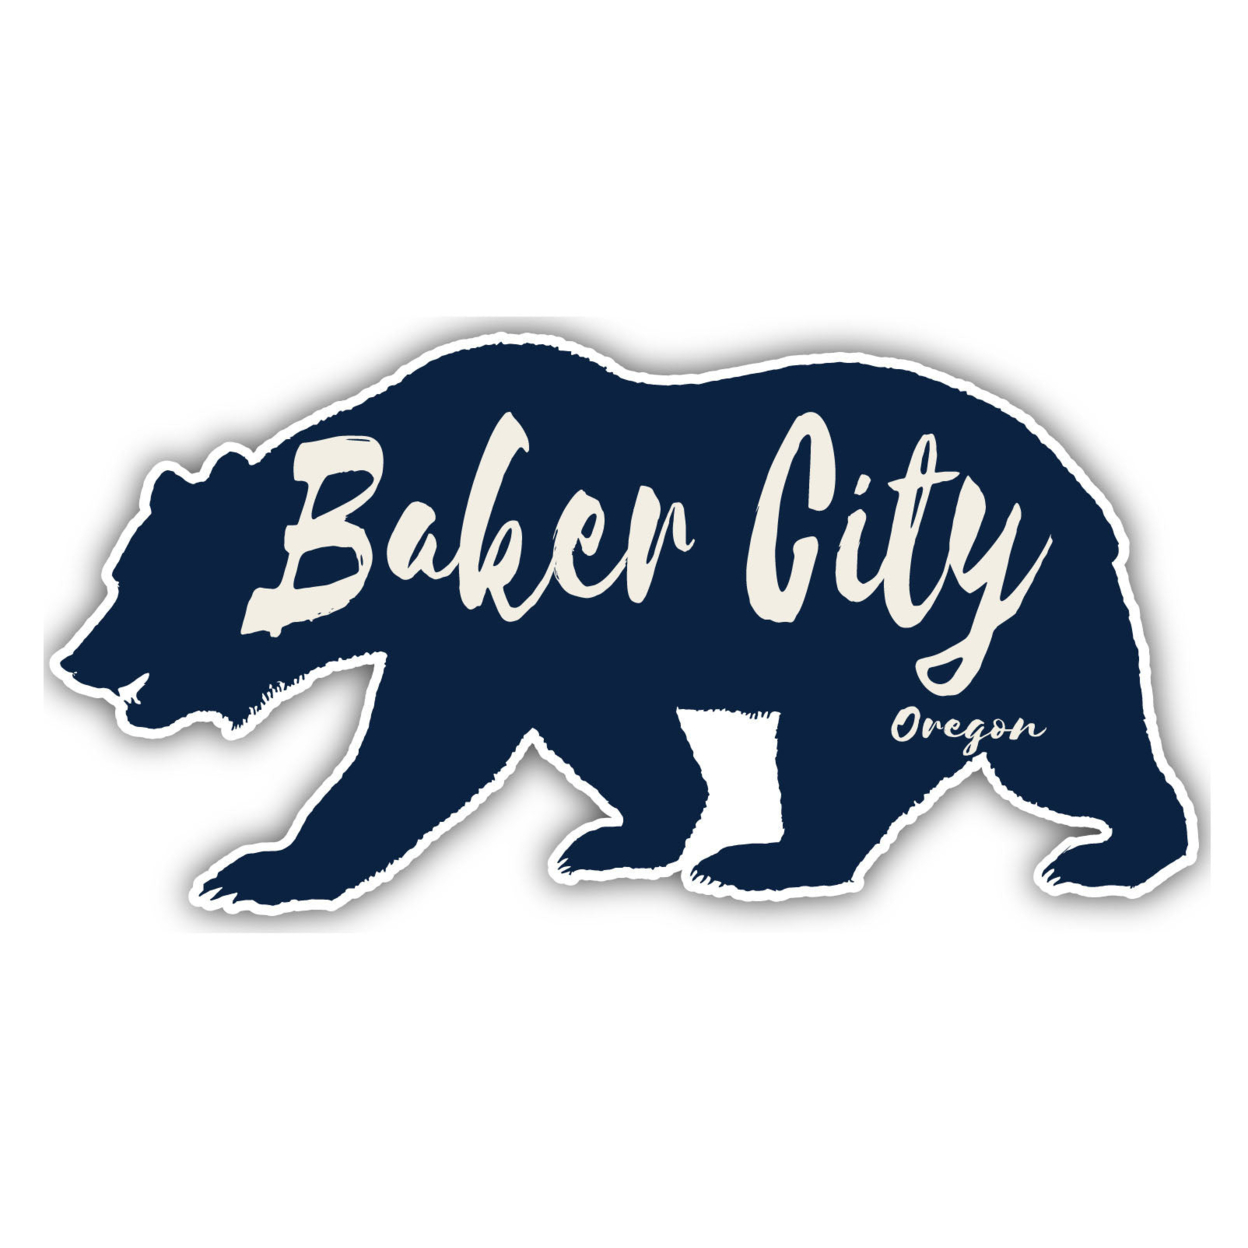 Baker City Oregon Souvenir Decorative Stickers (Choose Theme And Size) - Single Unit, 8-Inch, Bear